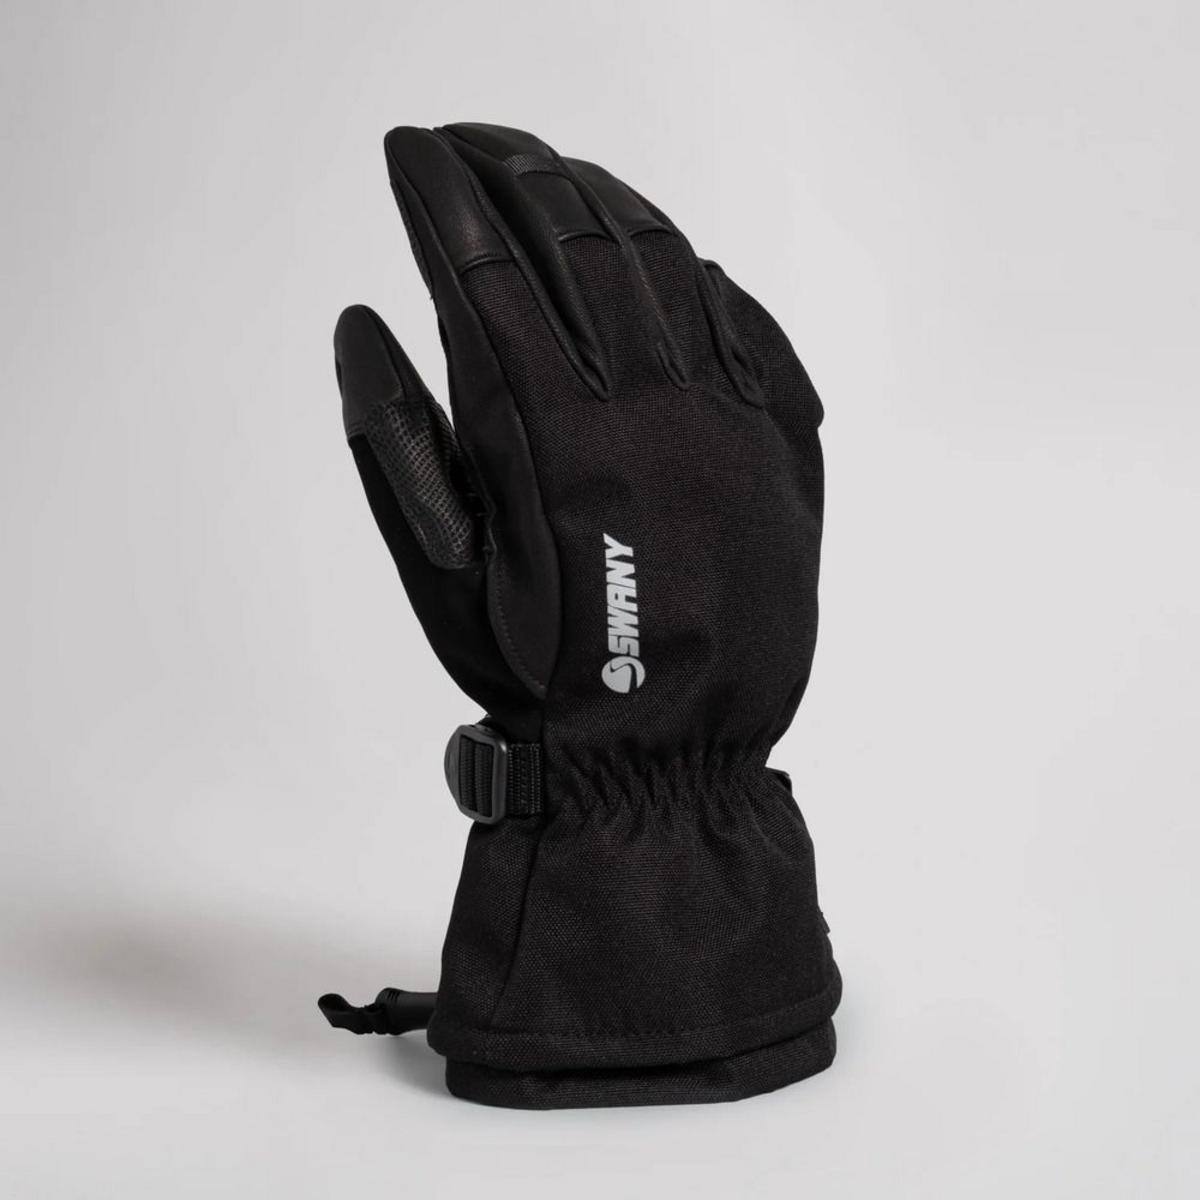 Swany Women's 970 3N1 Gloves 2.3